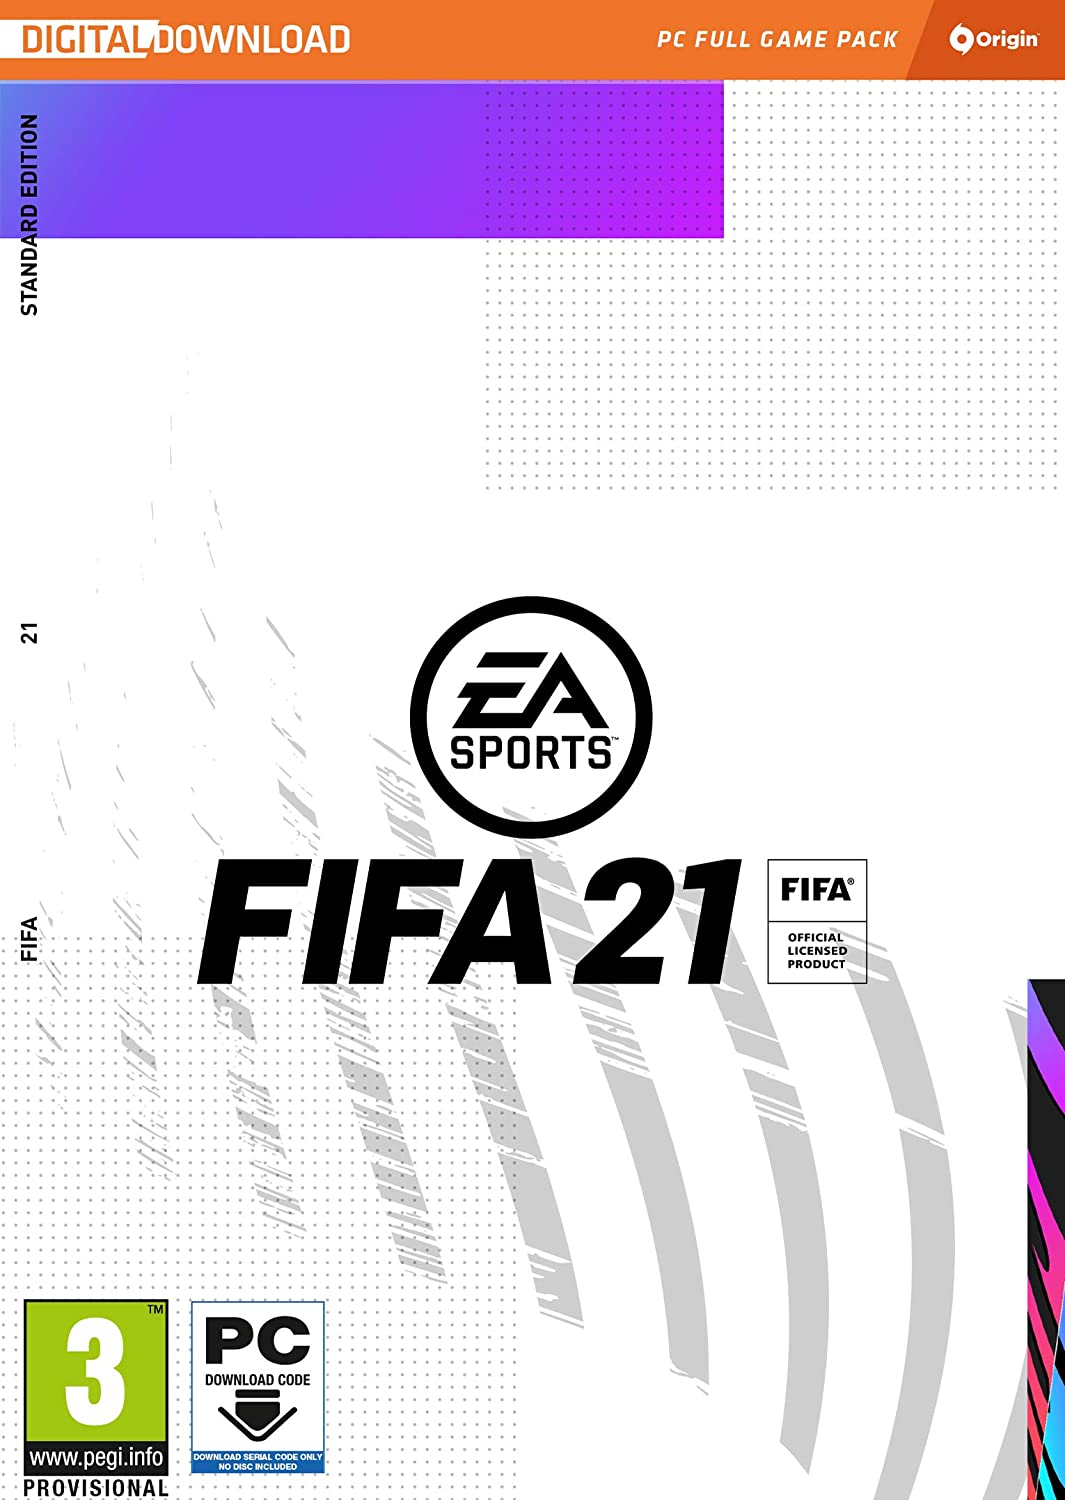 FIFA 22 - Pre-order Bonus DLC Key for Xbox One / Series S